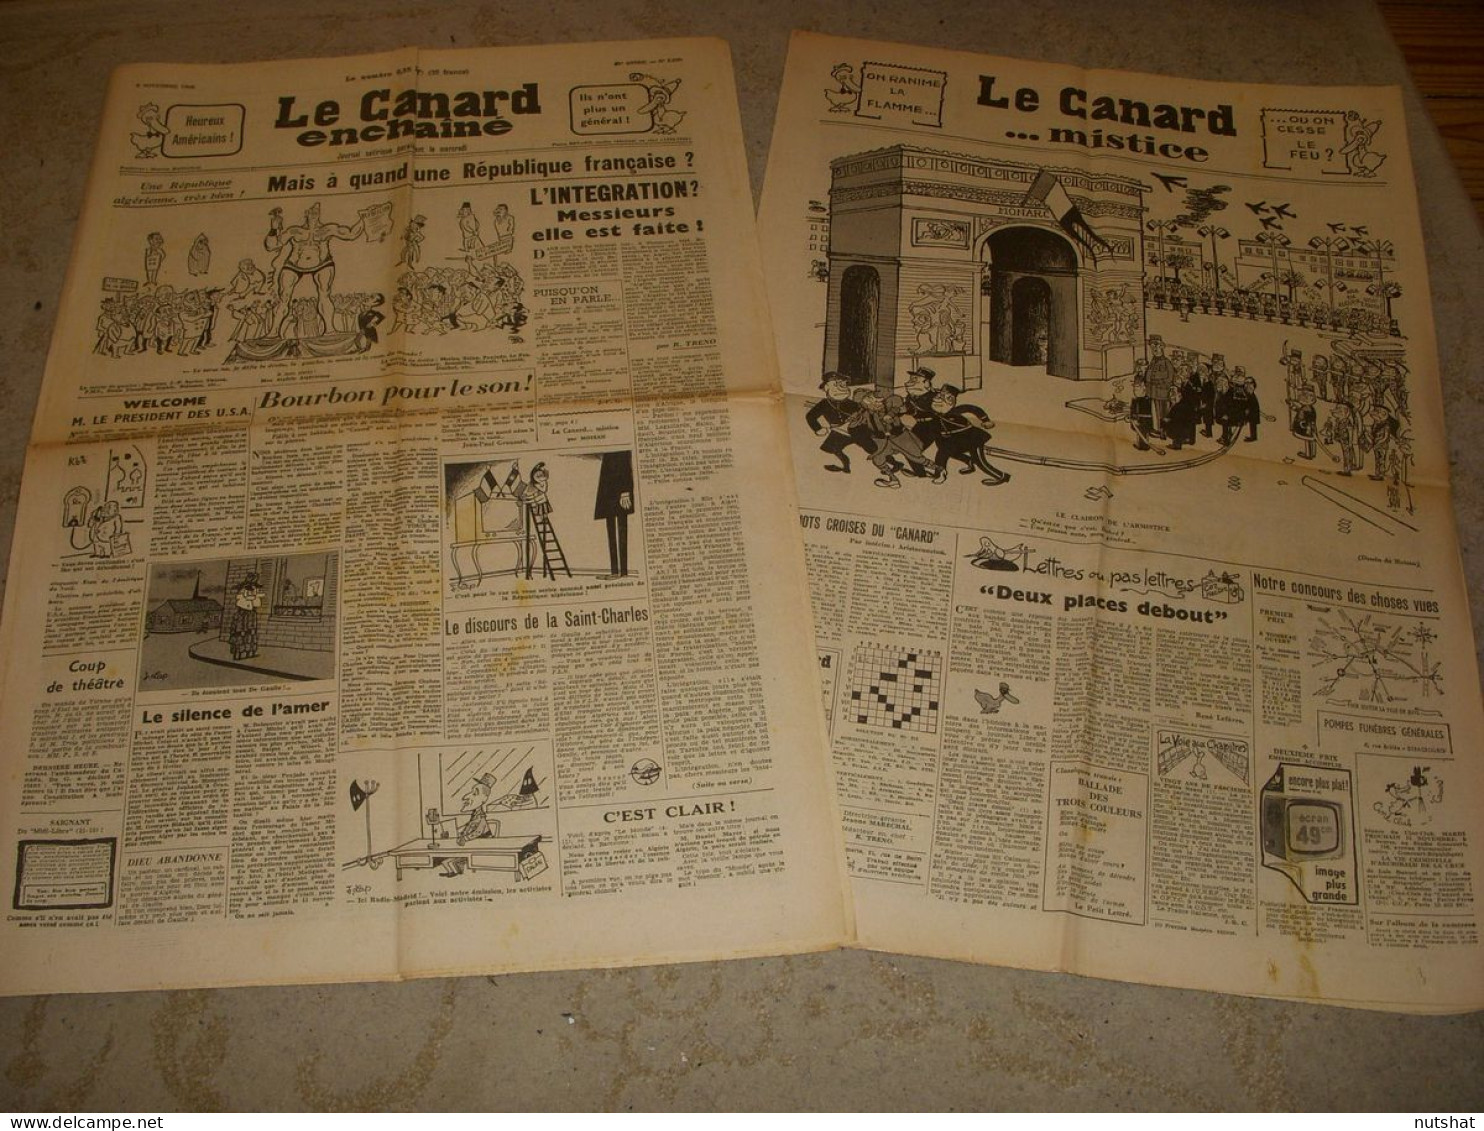 CANARD ENCHAINE 2090 09.11.1960 Pierre SABBAGH THEATRE RUY BLAS Louis MOLLION - Politique